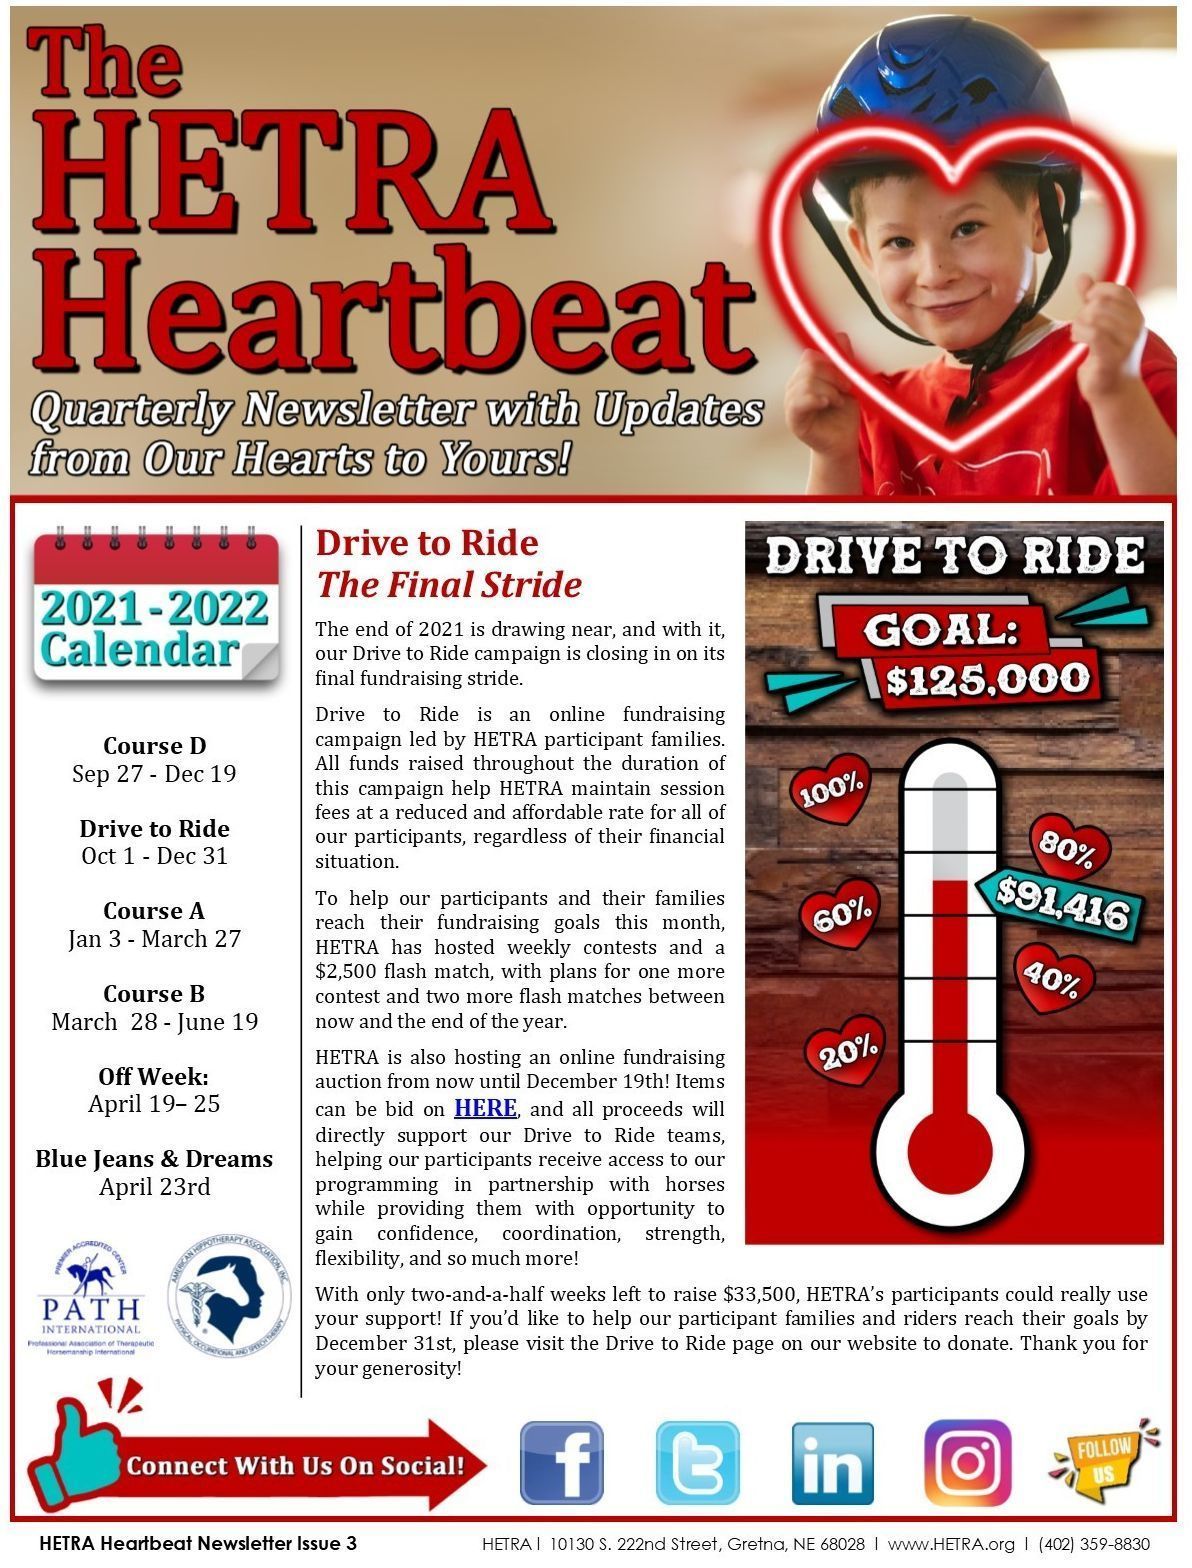 Heartbeat Issue #3-Winter 2021